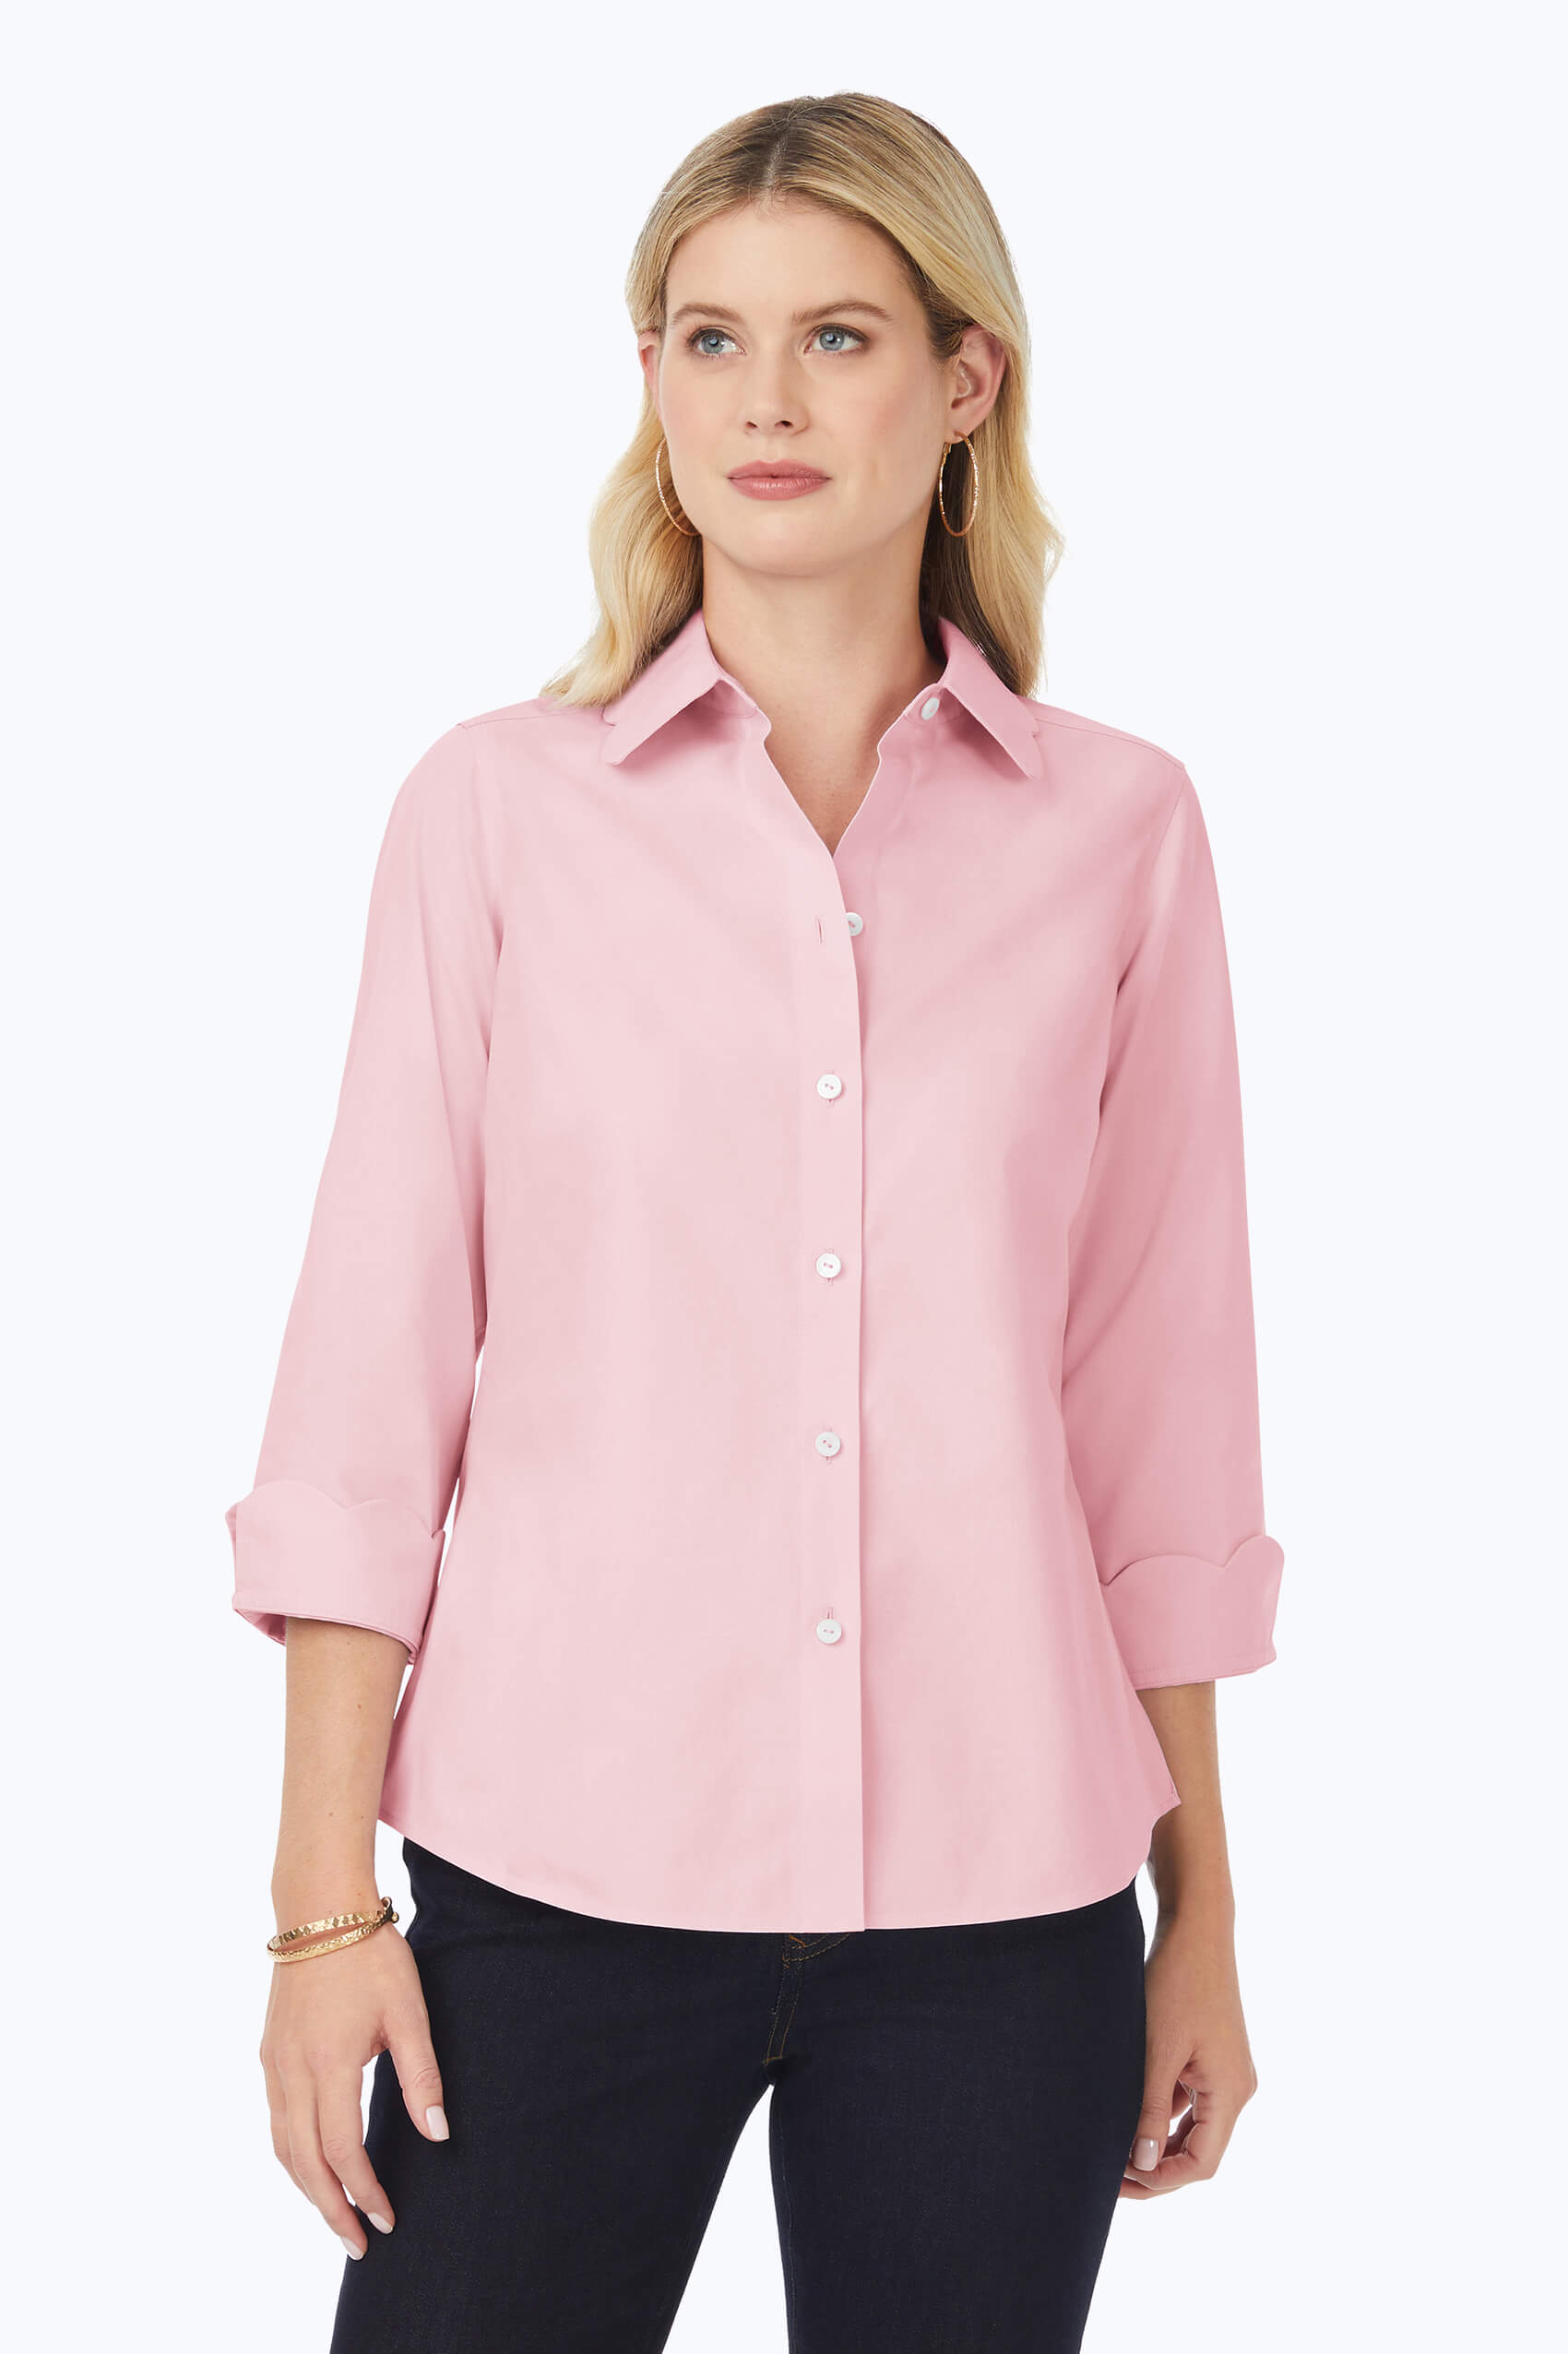 Gwen Pinpoint Non-Iron Scallop Shirt